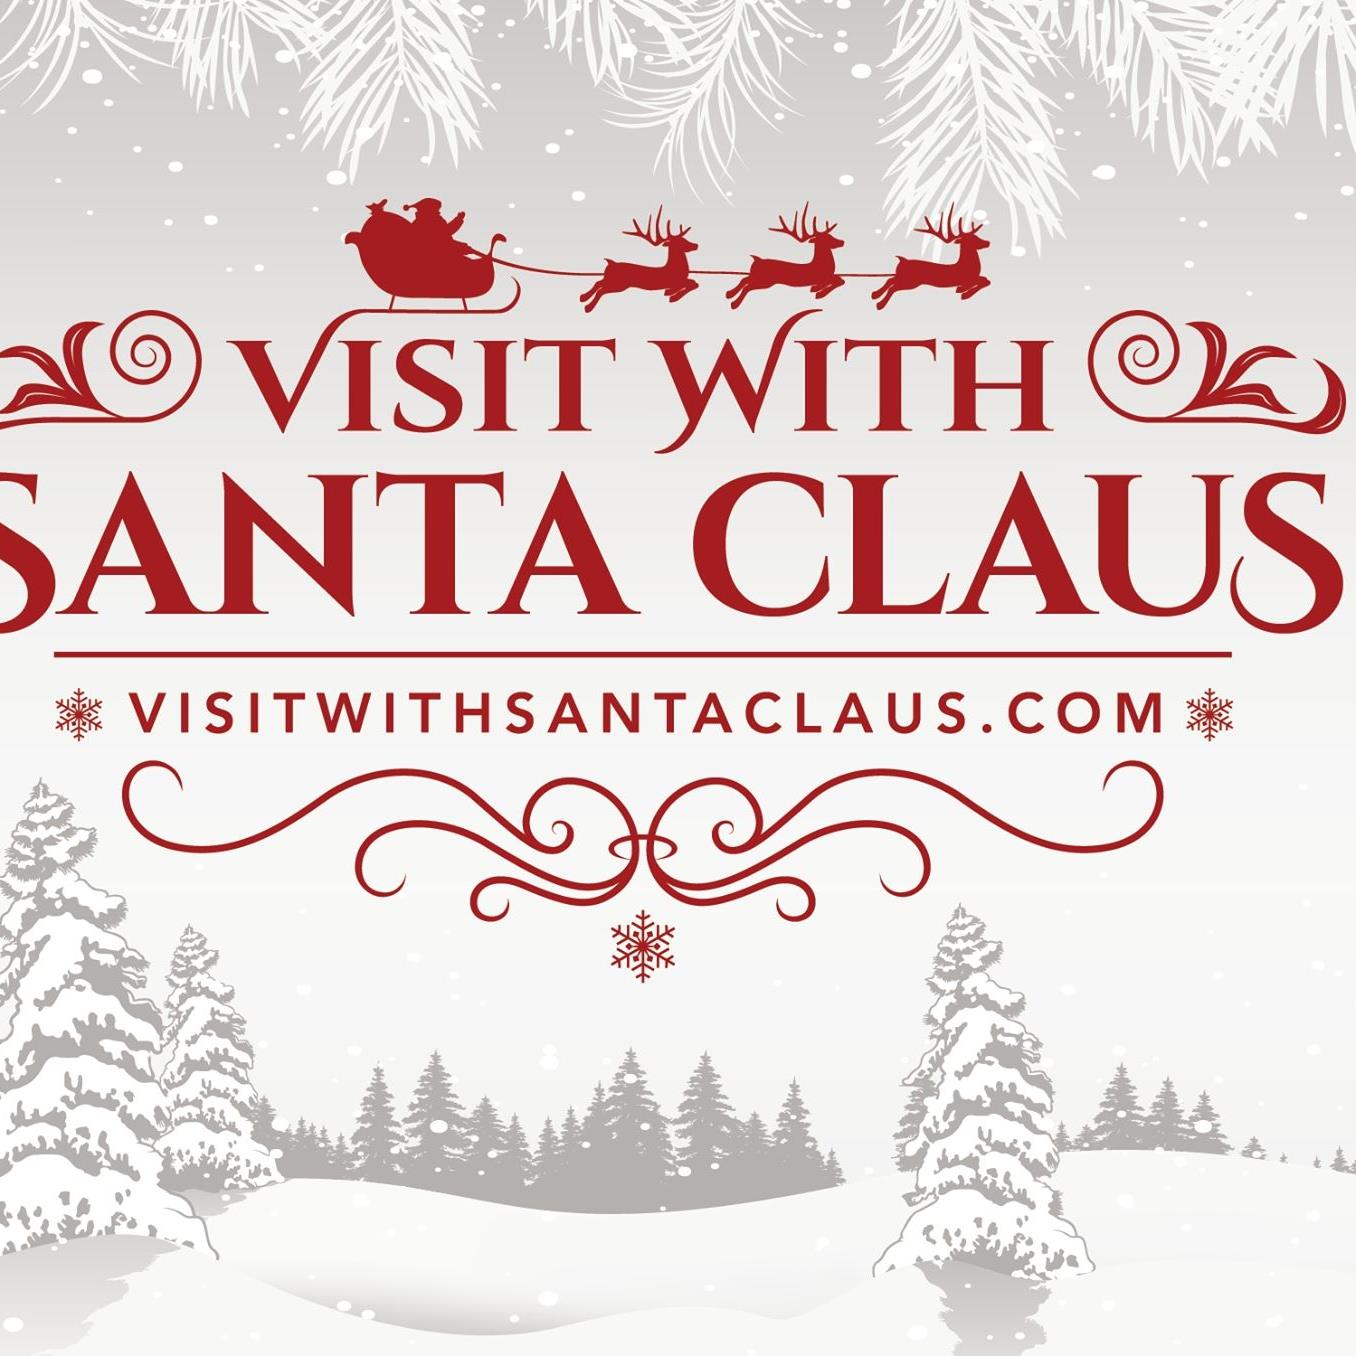 Visit with Santa Claus